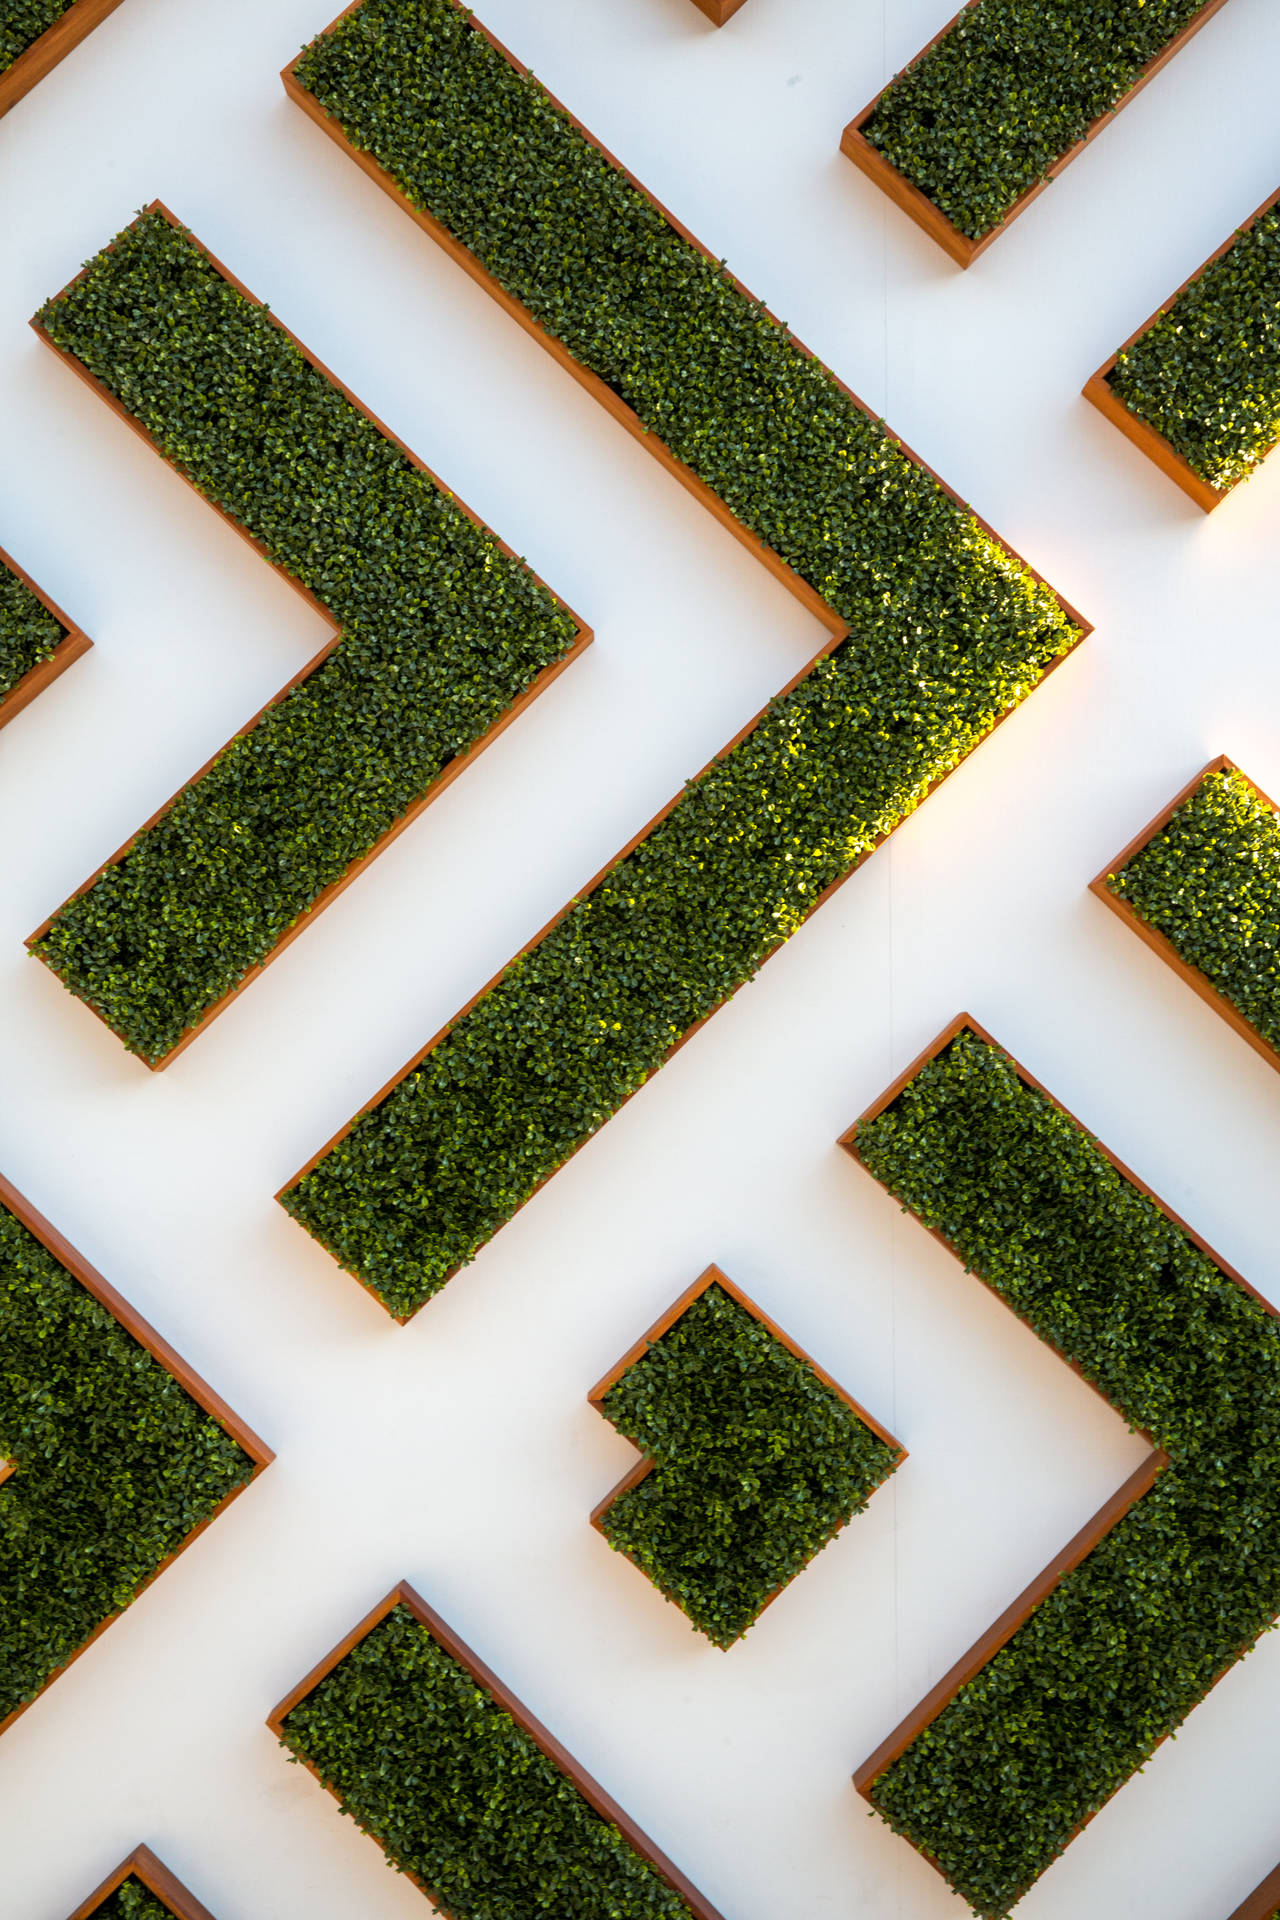 Abstract Maze Garden Background